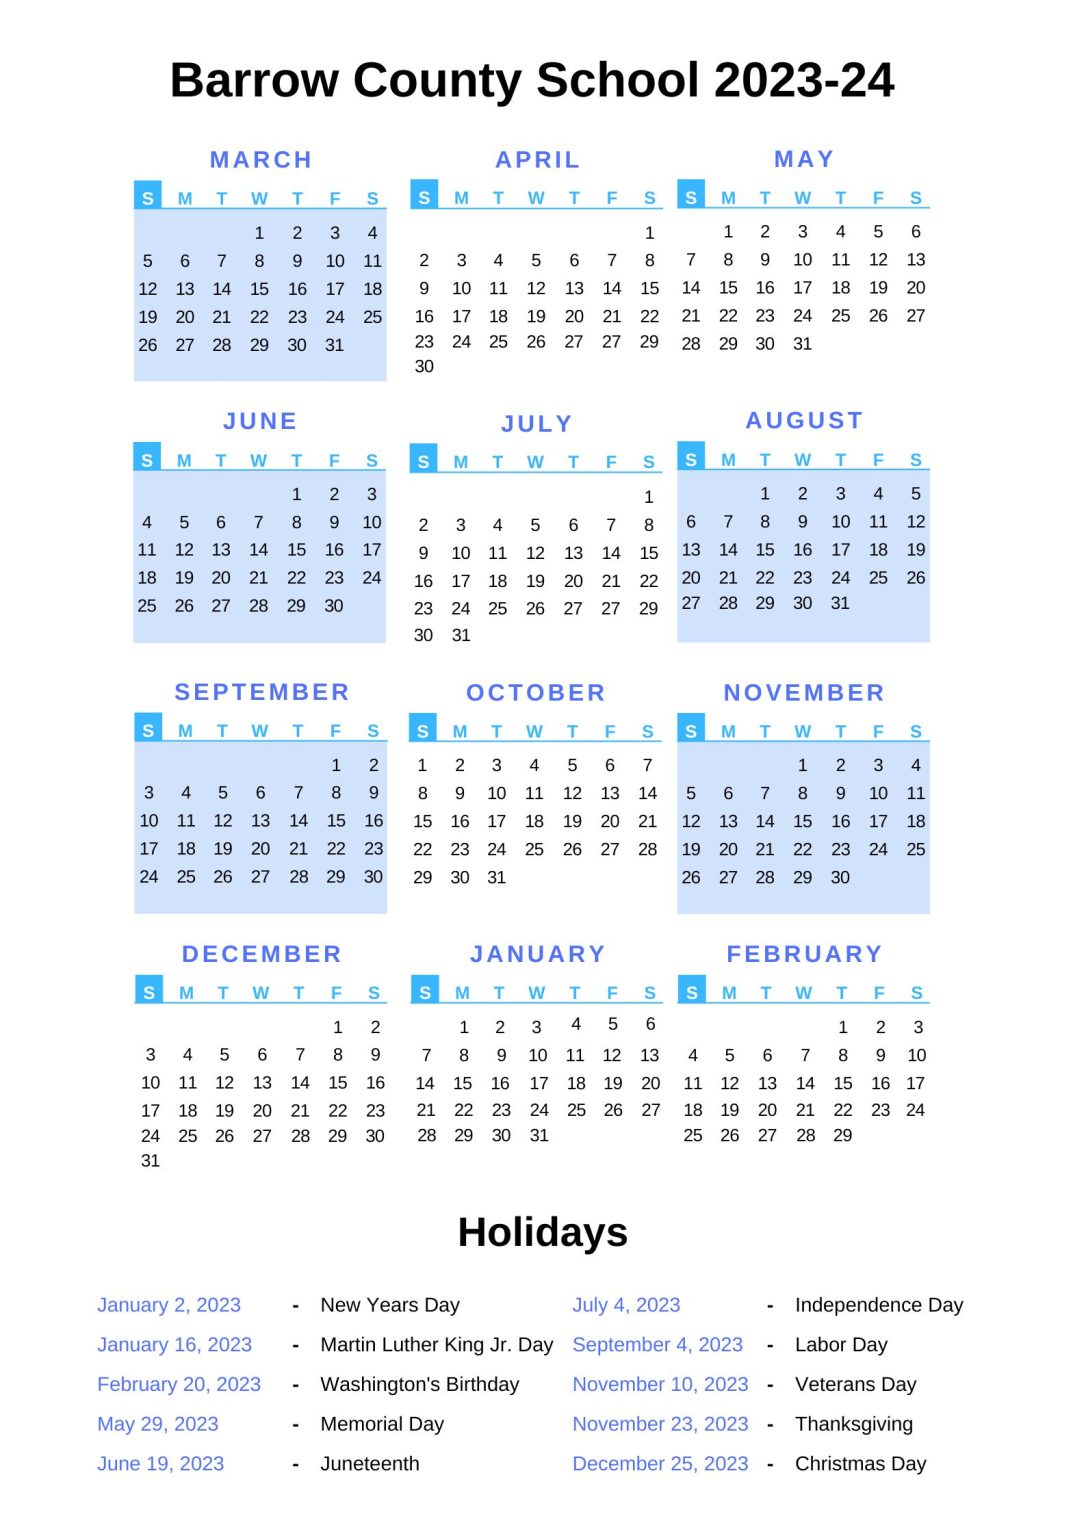 Barrow County Schools Calendar 2023 24 with Holidays